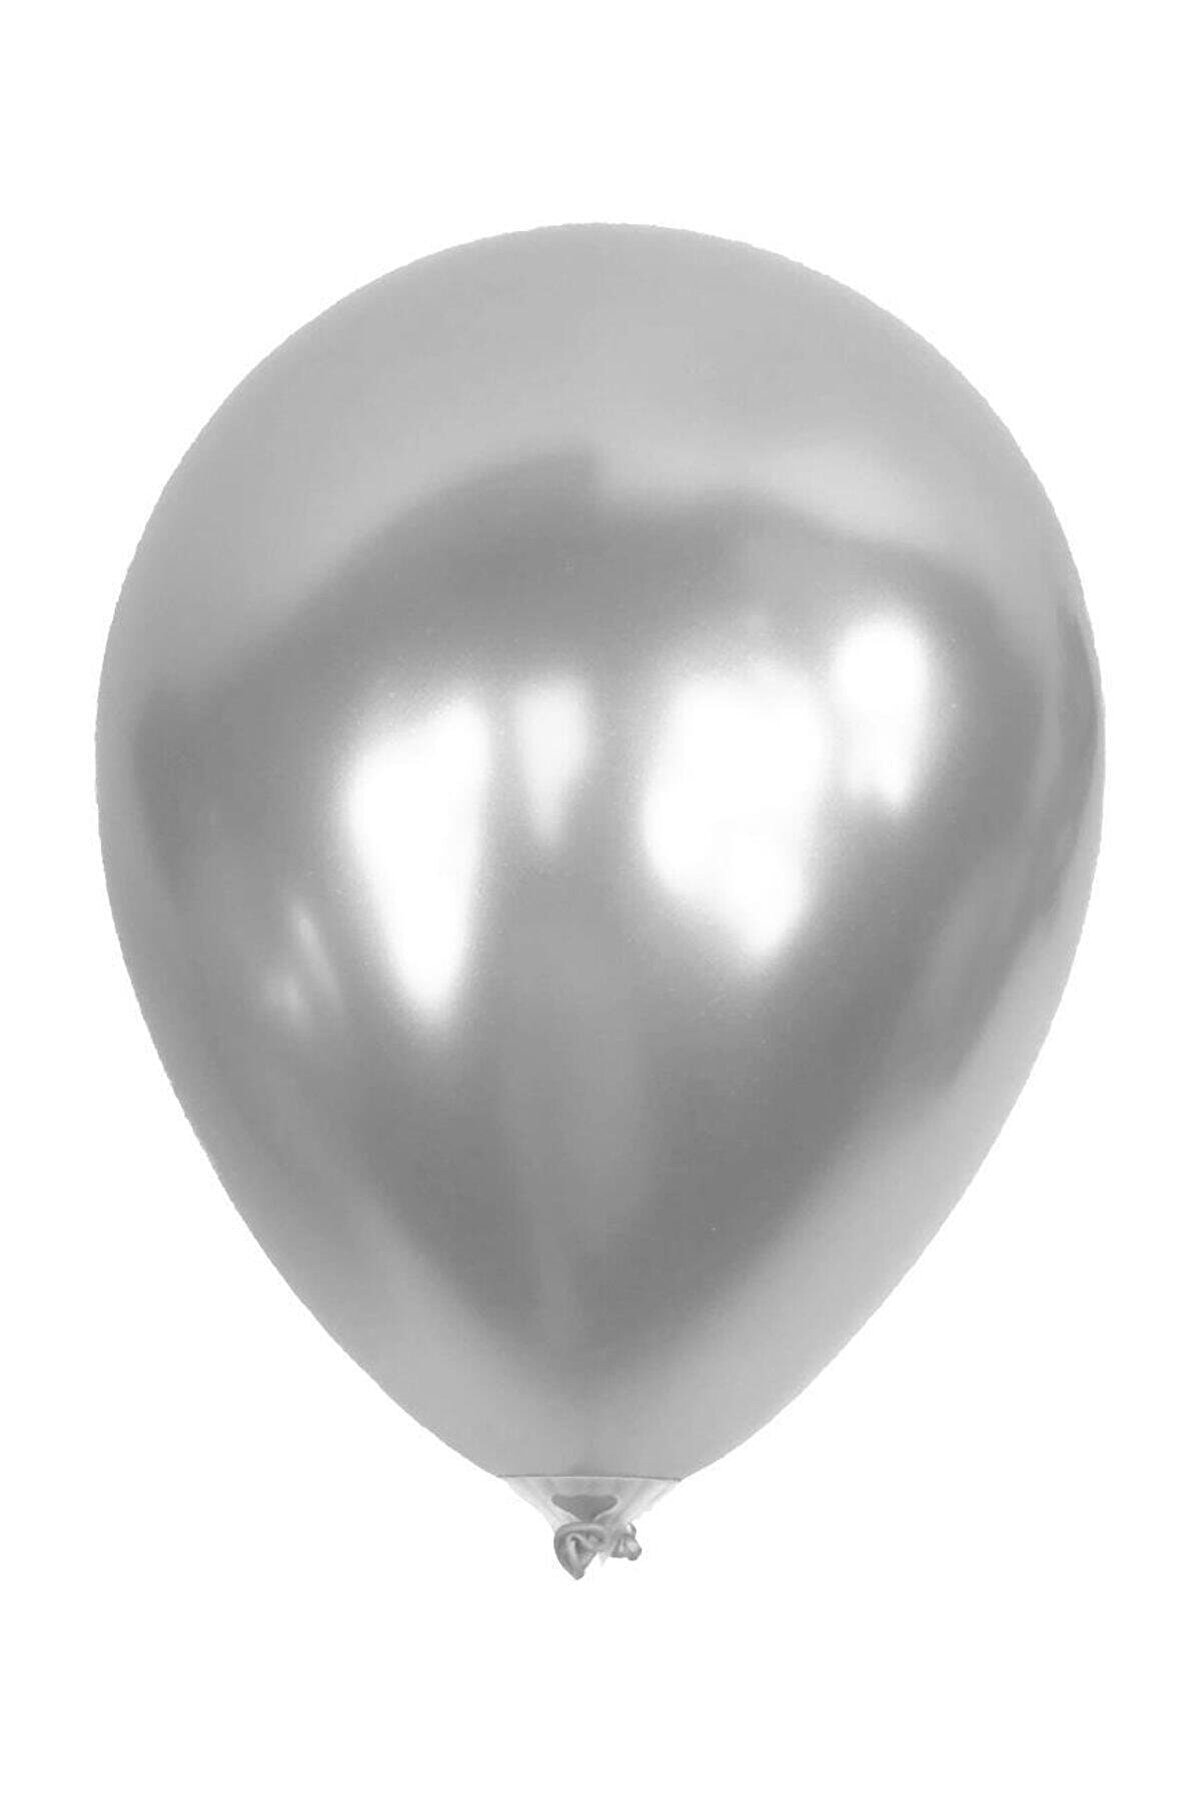 Kikajoy Metalik Gümüş Balon 12'li